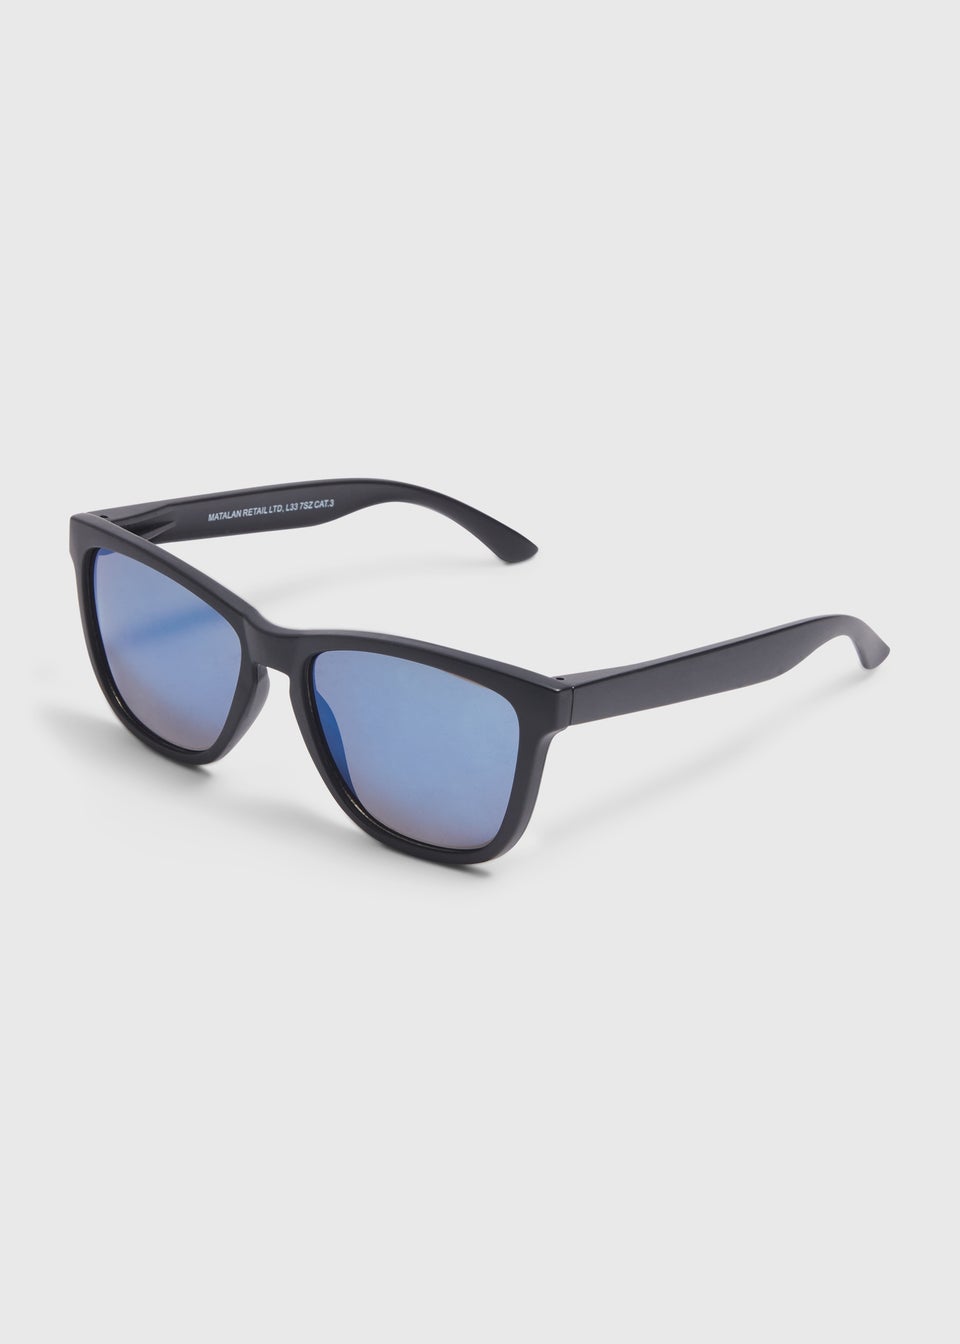 Blue Lens Wayfarer Black Frame Sunglasses